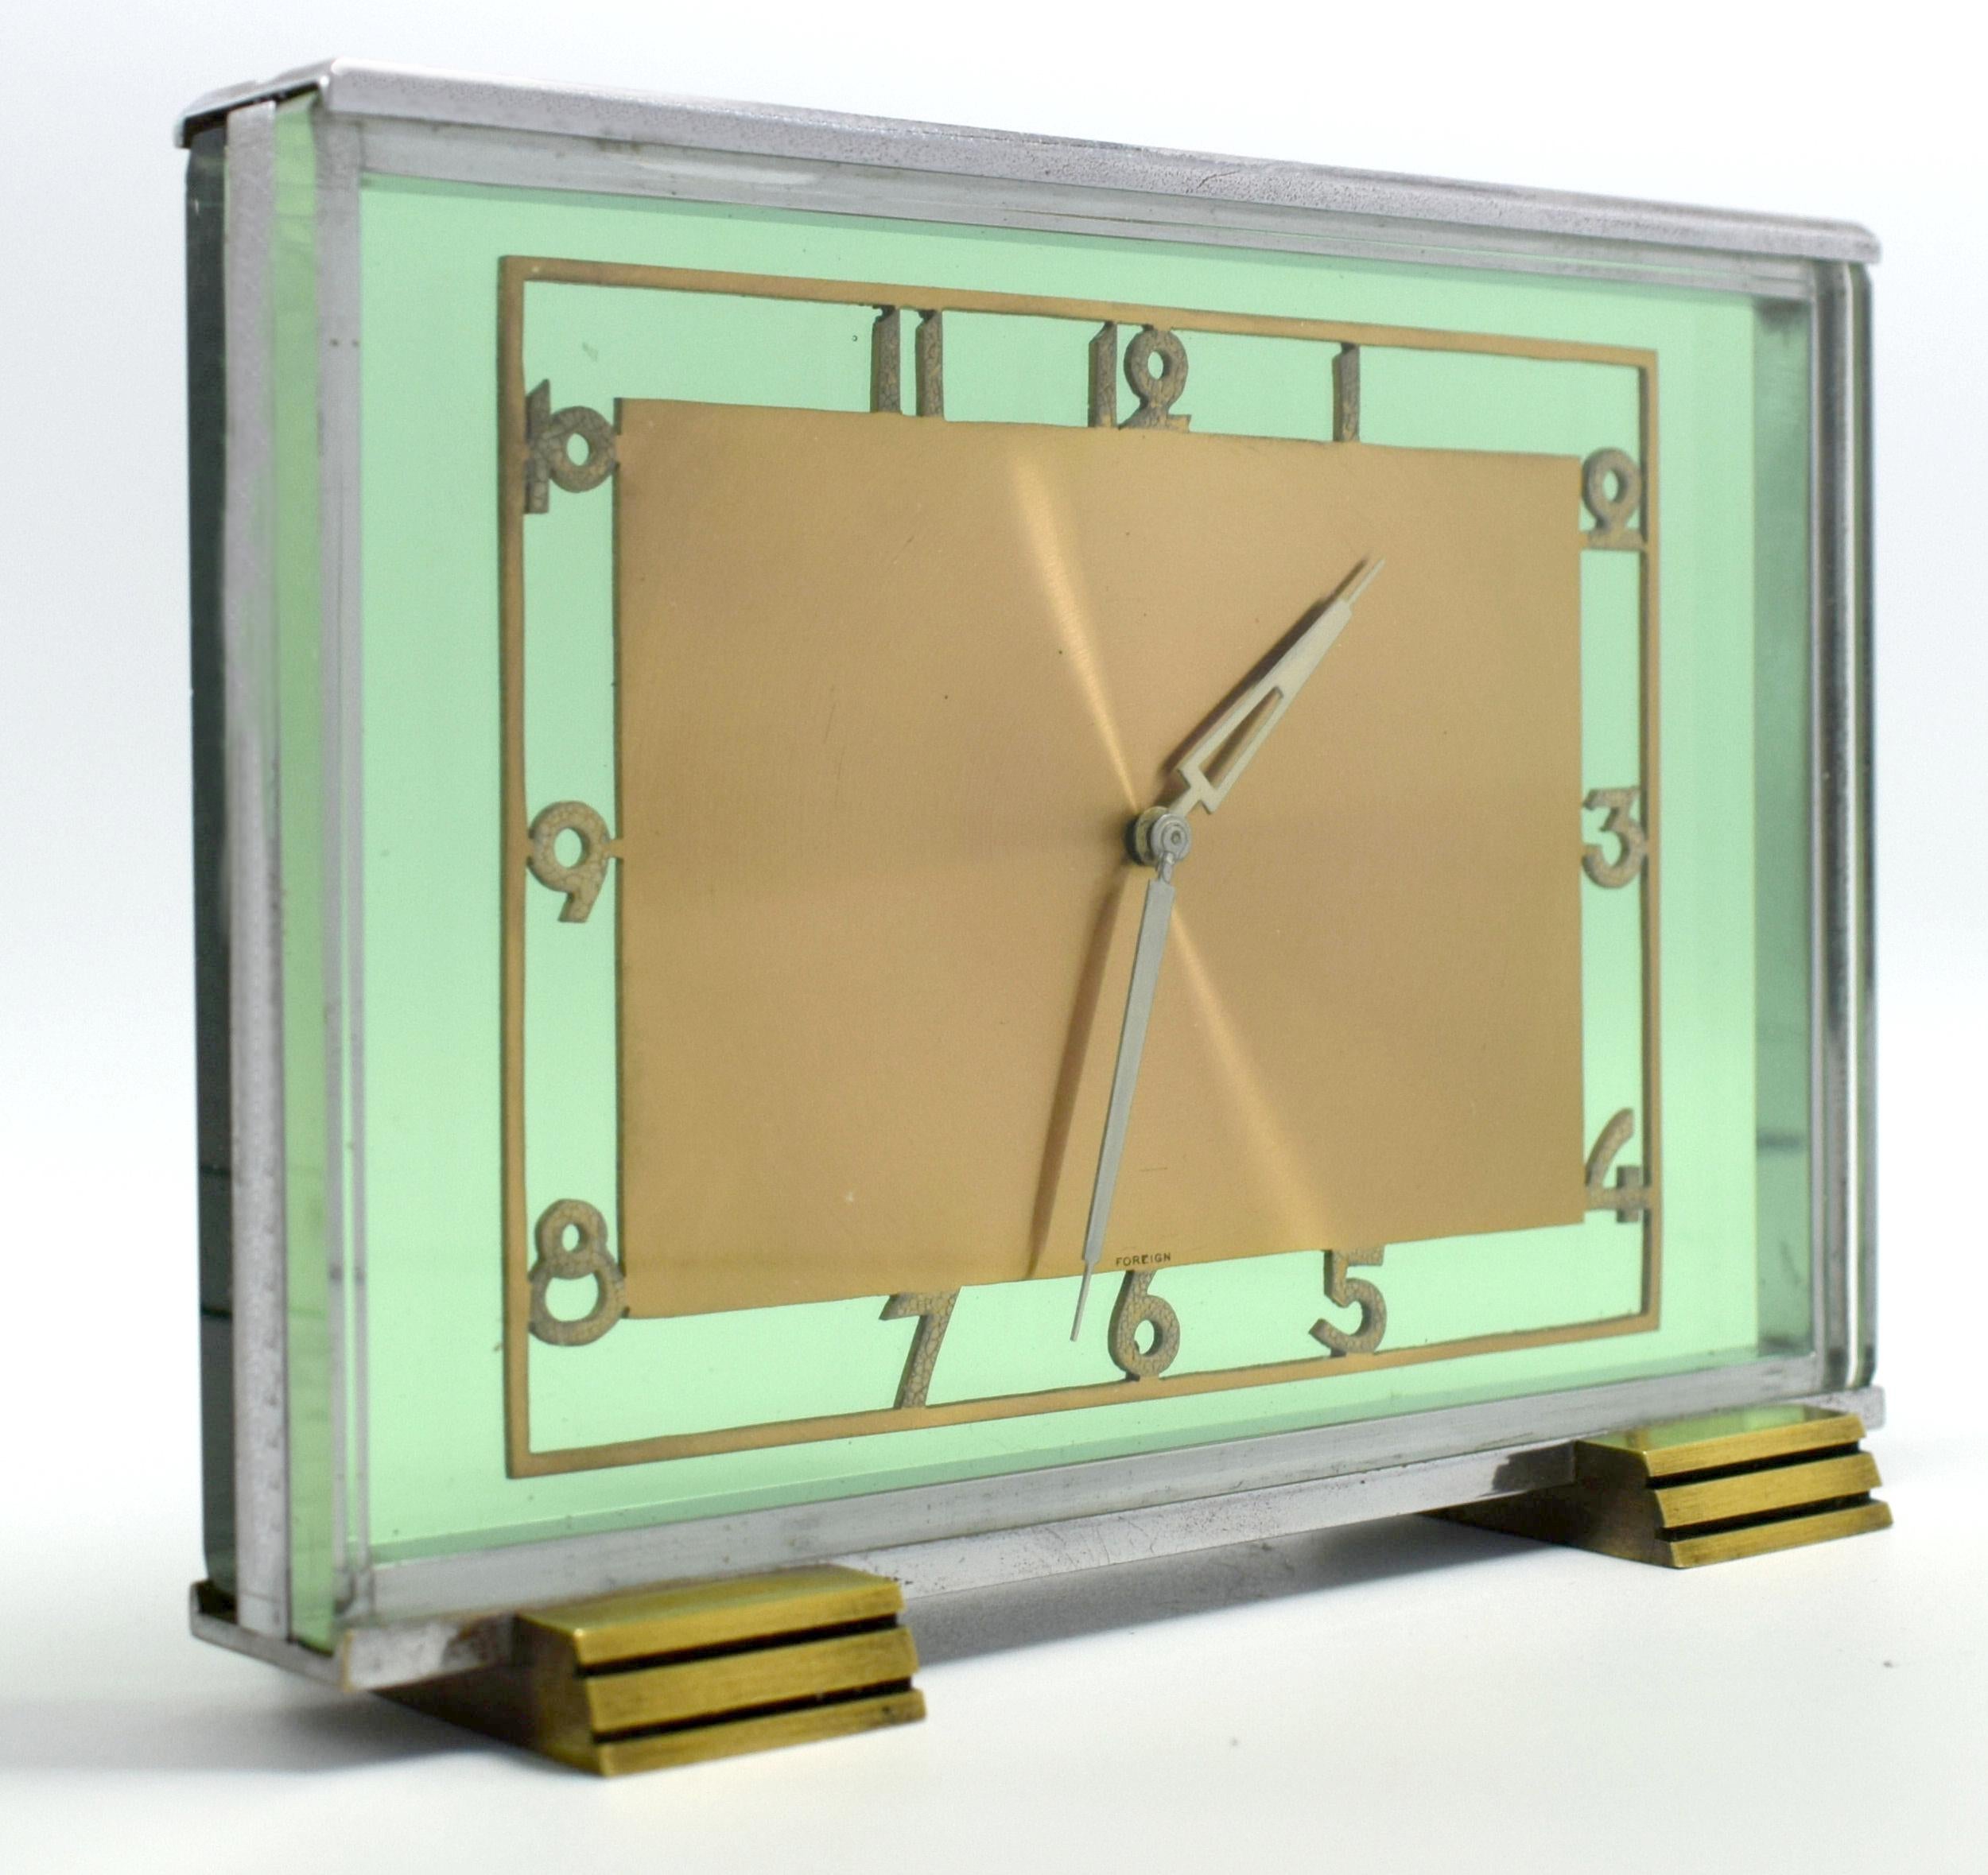 English Art Deco Modernist 8 Day Green Glass Mantle Clock, circa 1930s